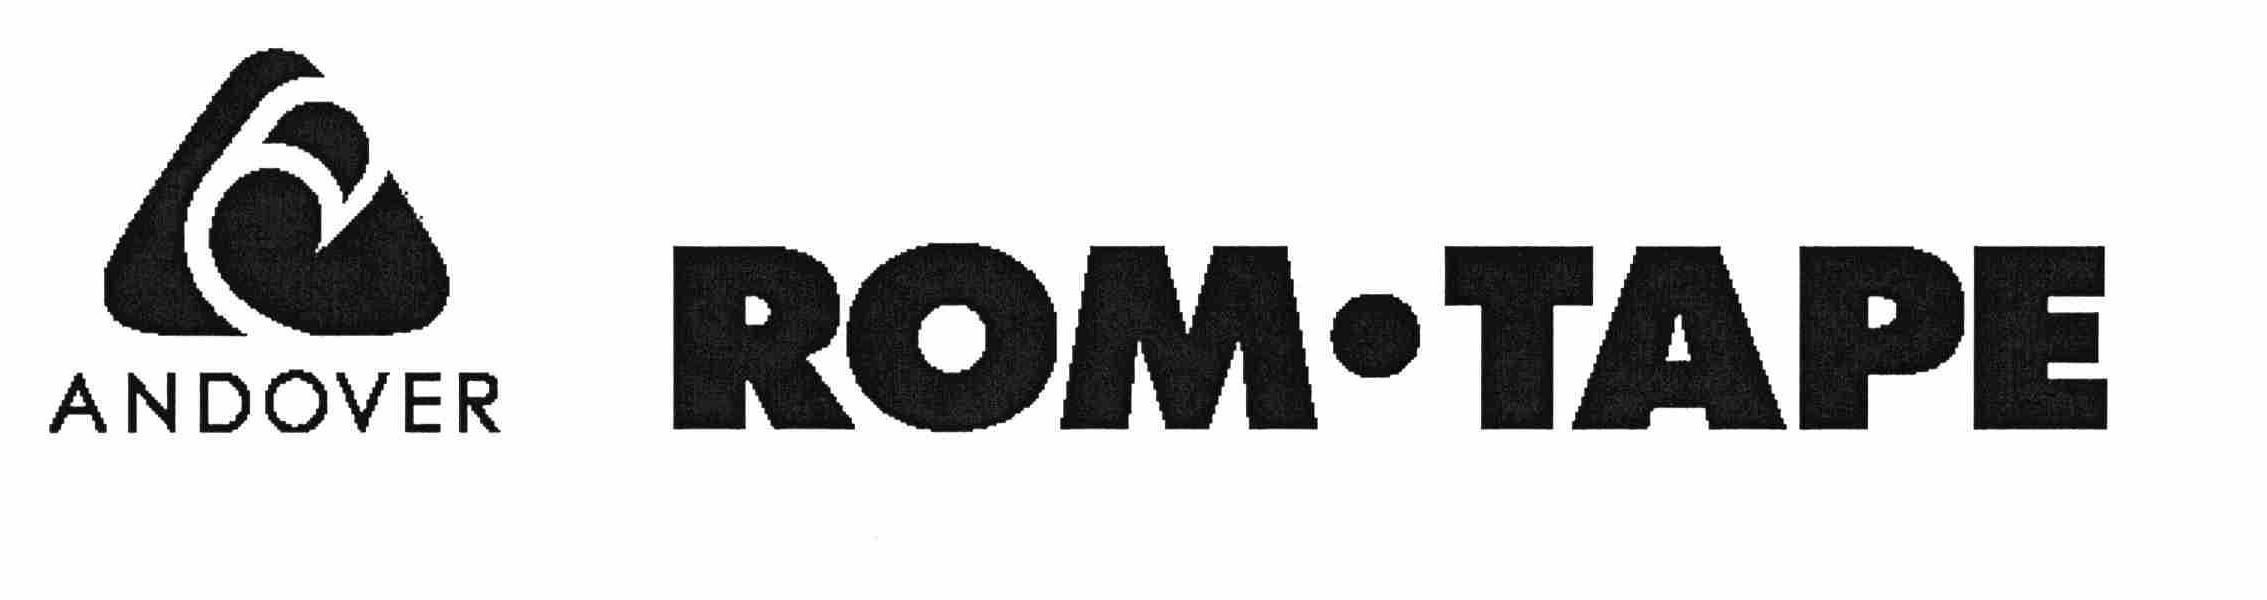 Trademark Logo ANDOVER ROMÂ·TAPE